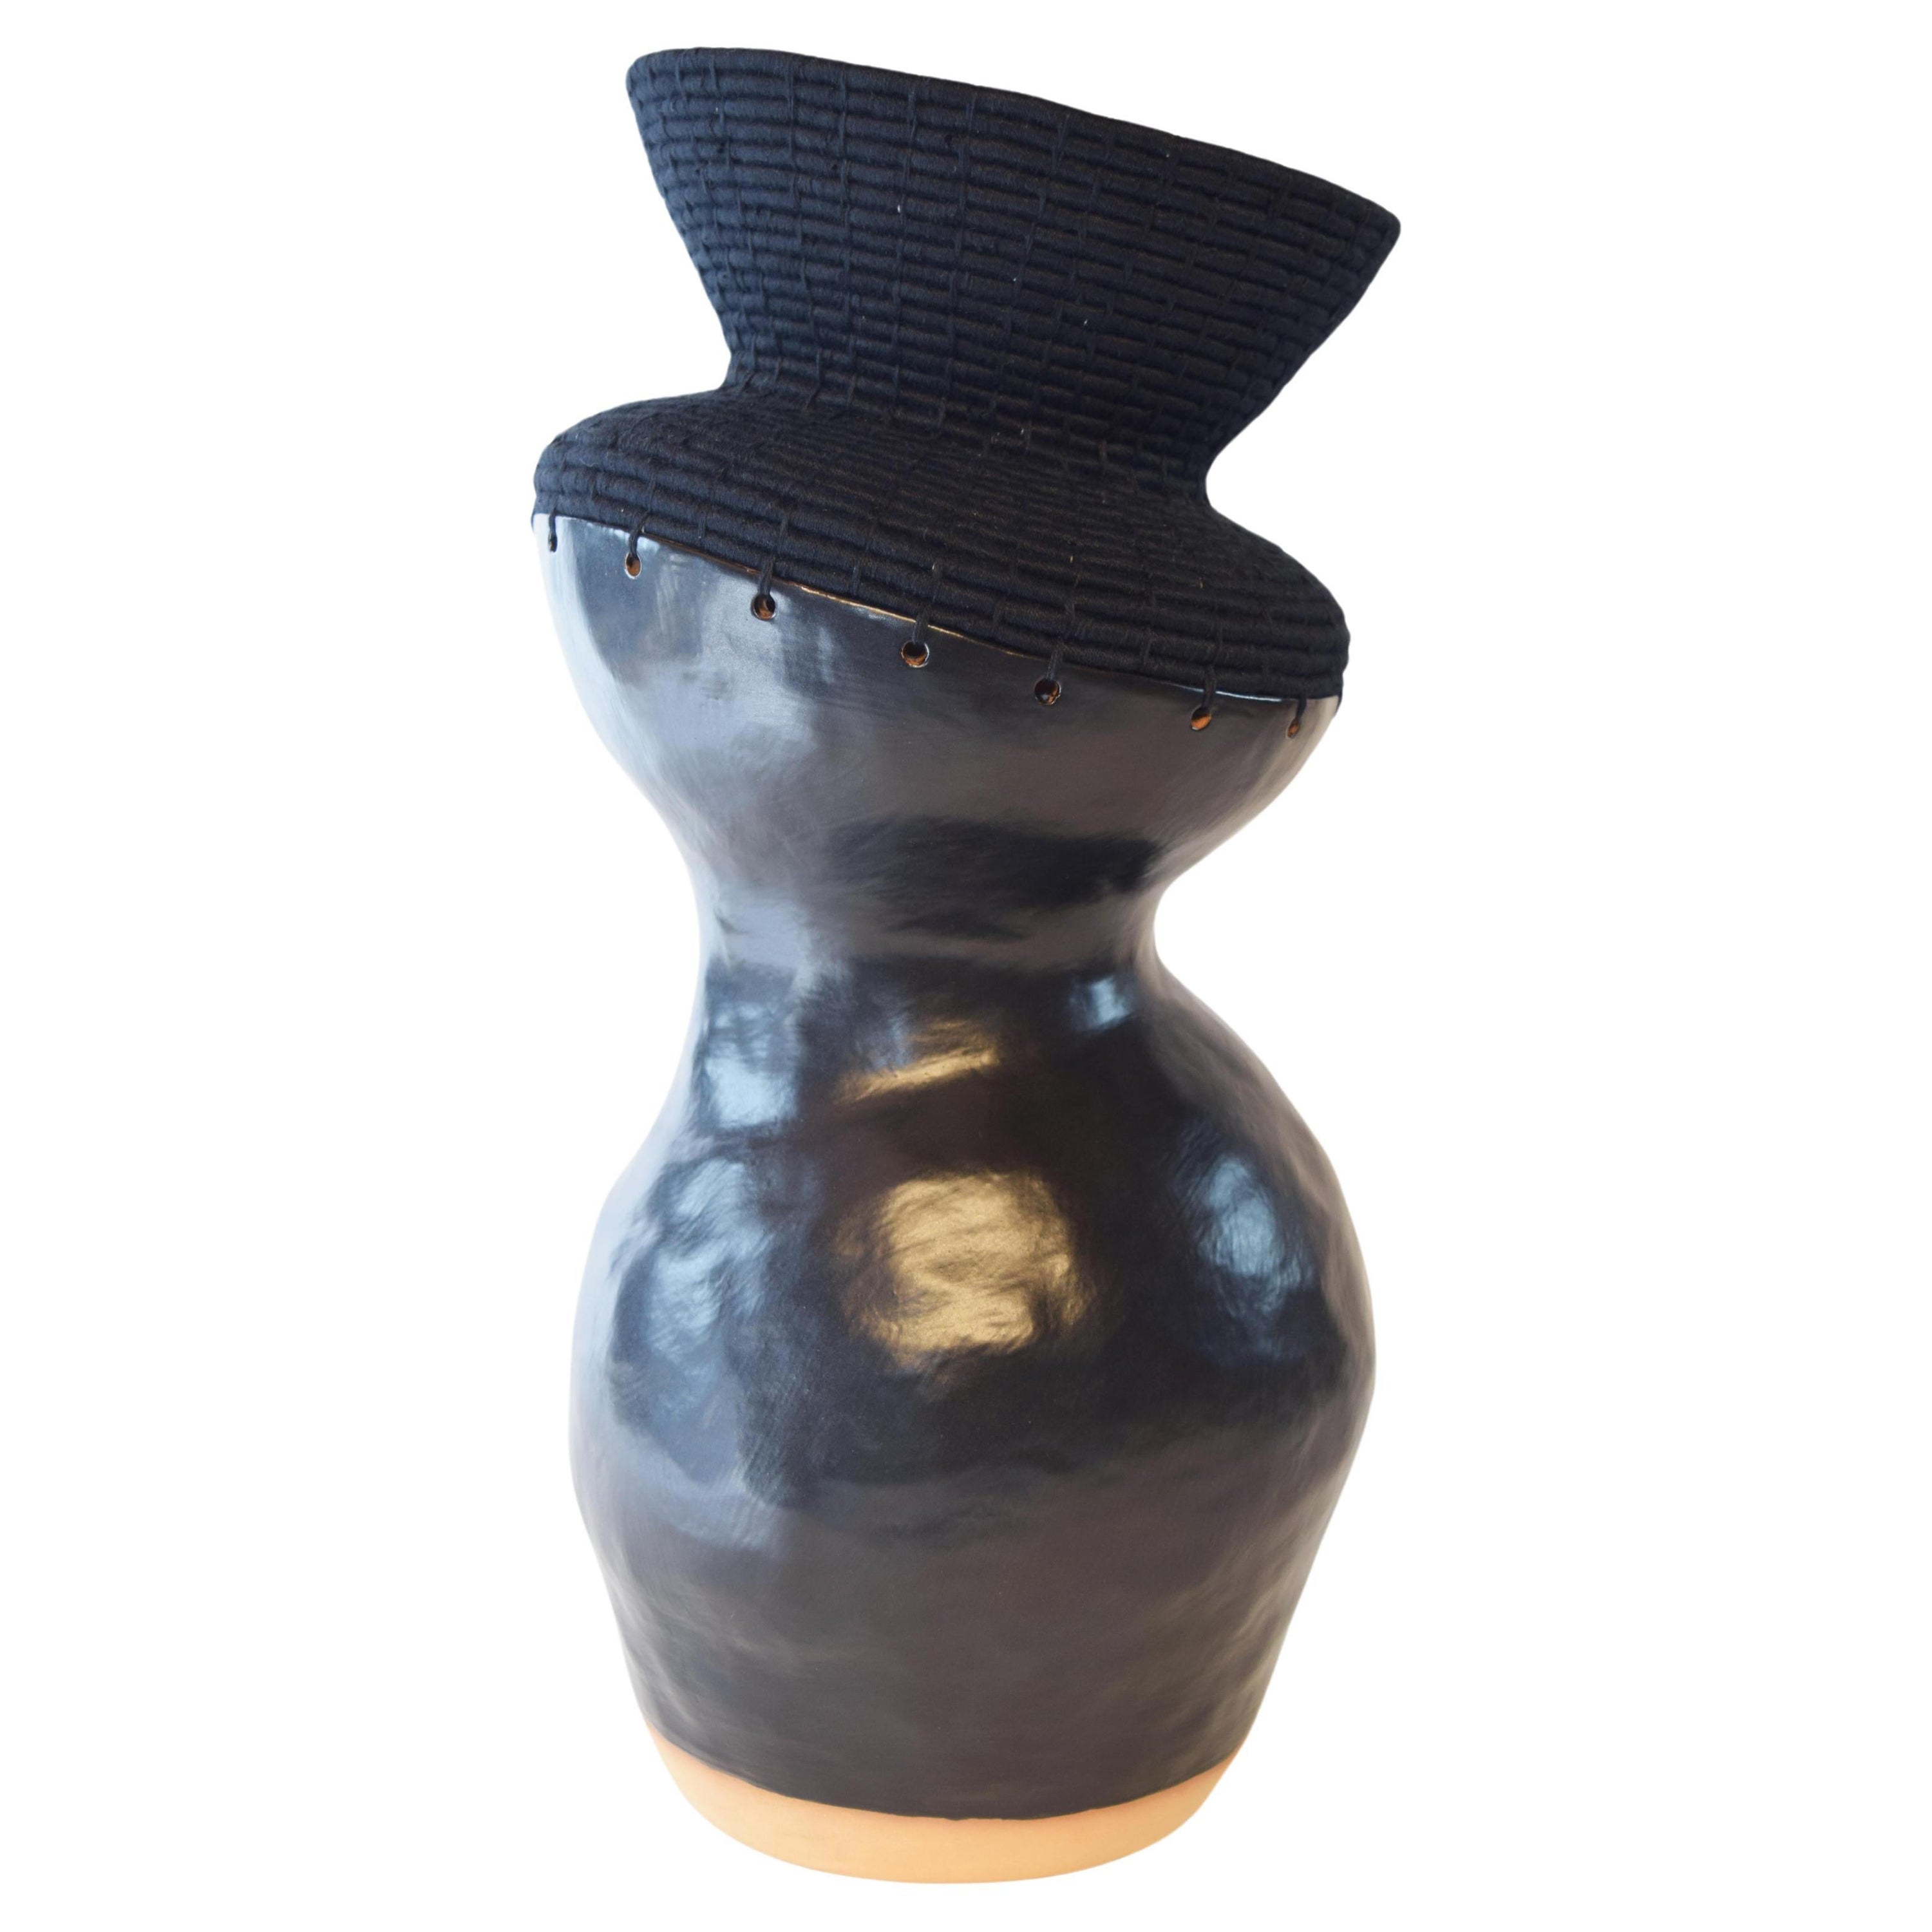 One of a Kind Ceramic & Woven Fiber Vessel #761, Satin Black Glaze, Black Cotton For Sale